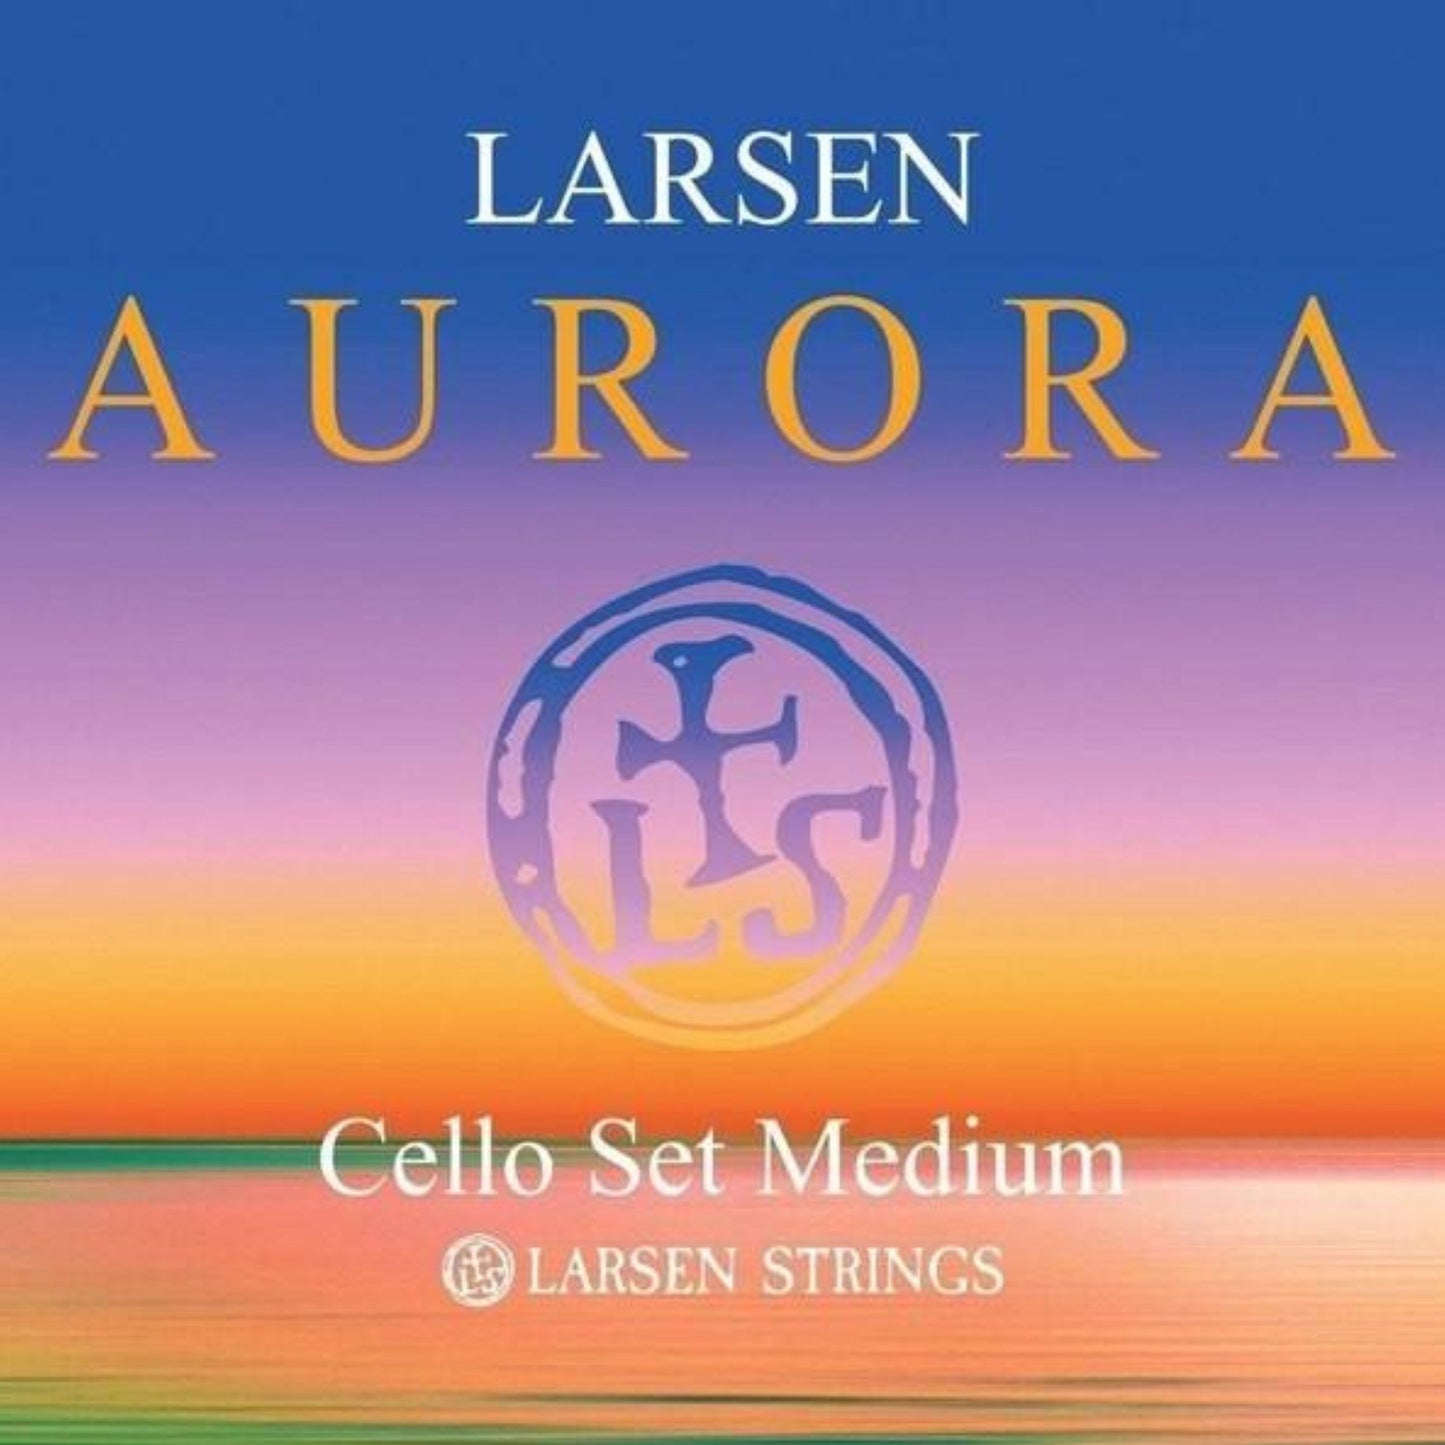 Satz LARSEN Aurora Cello Saiten 4/4